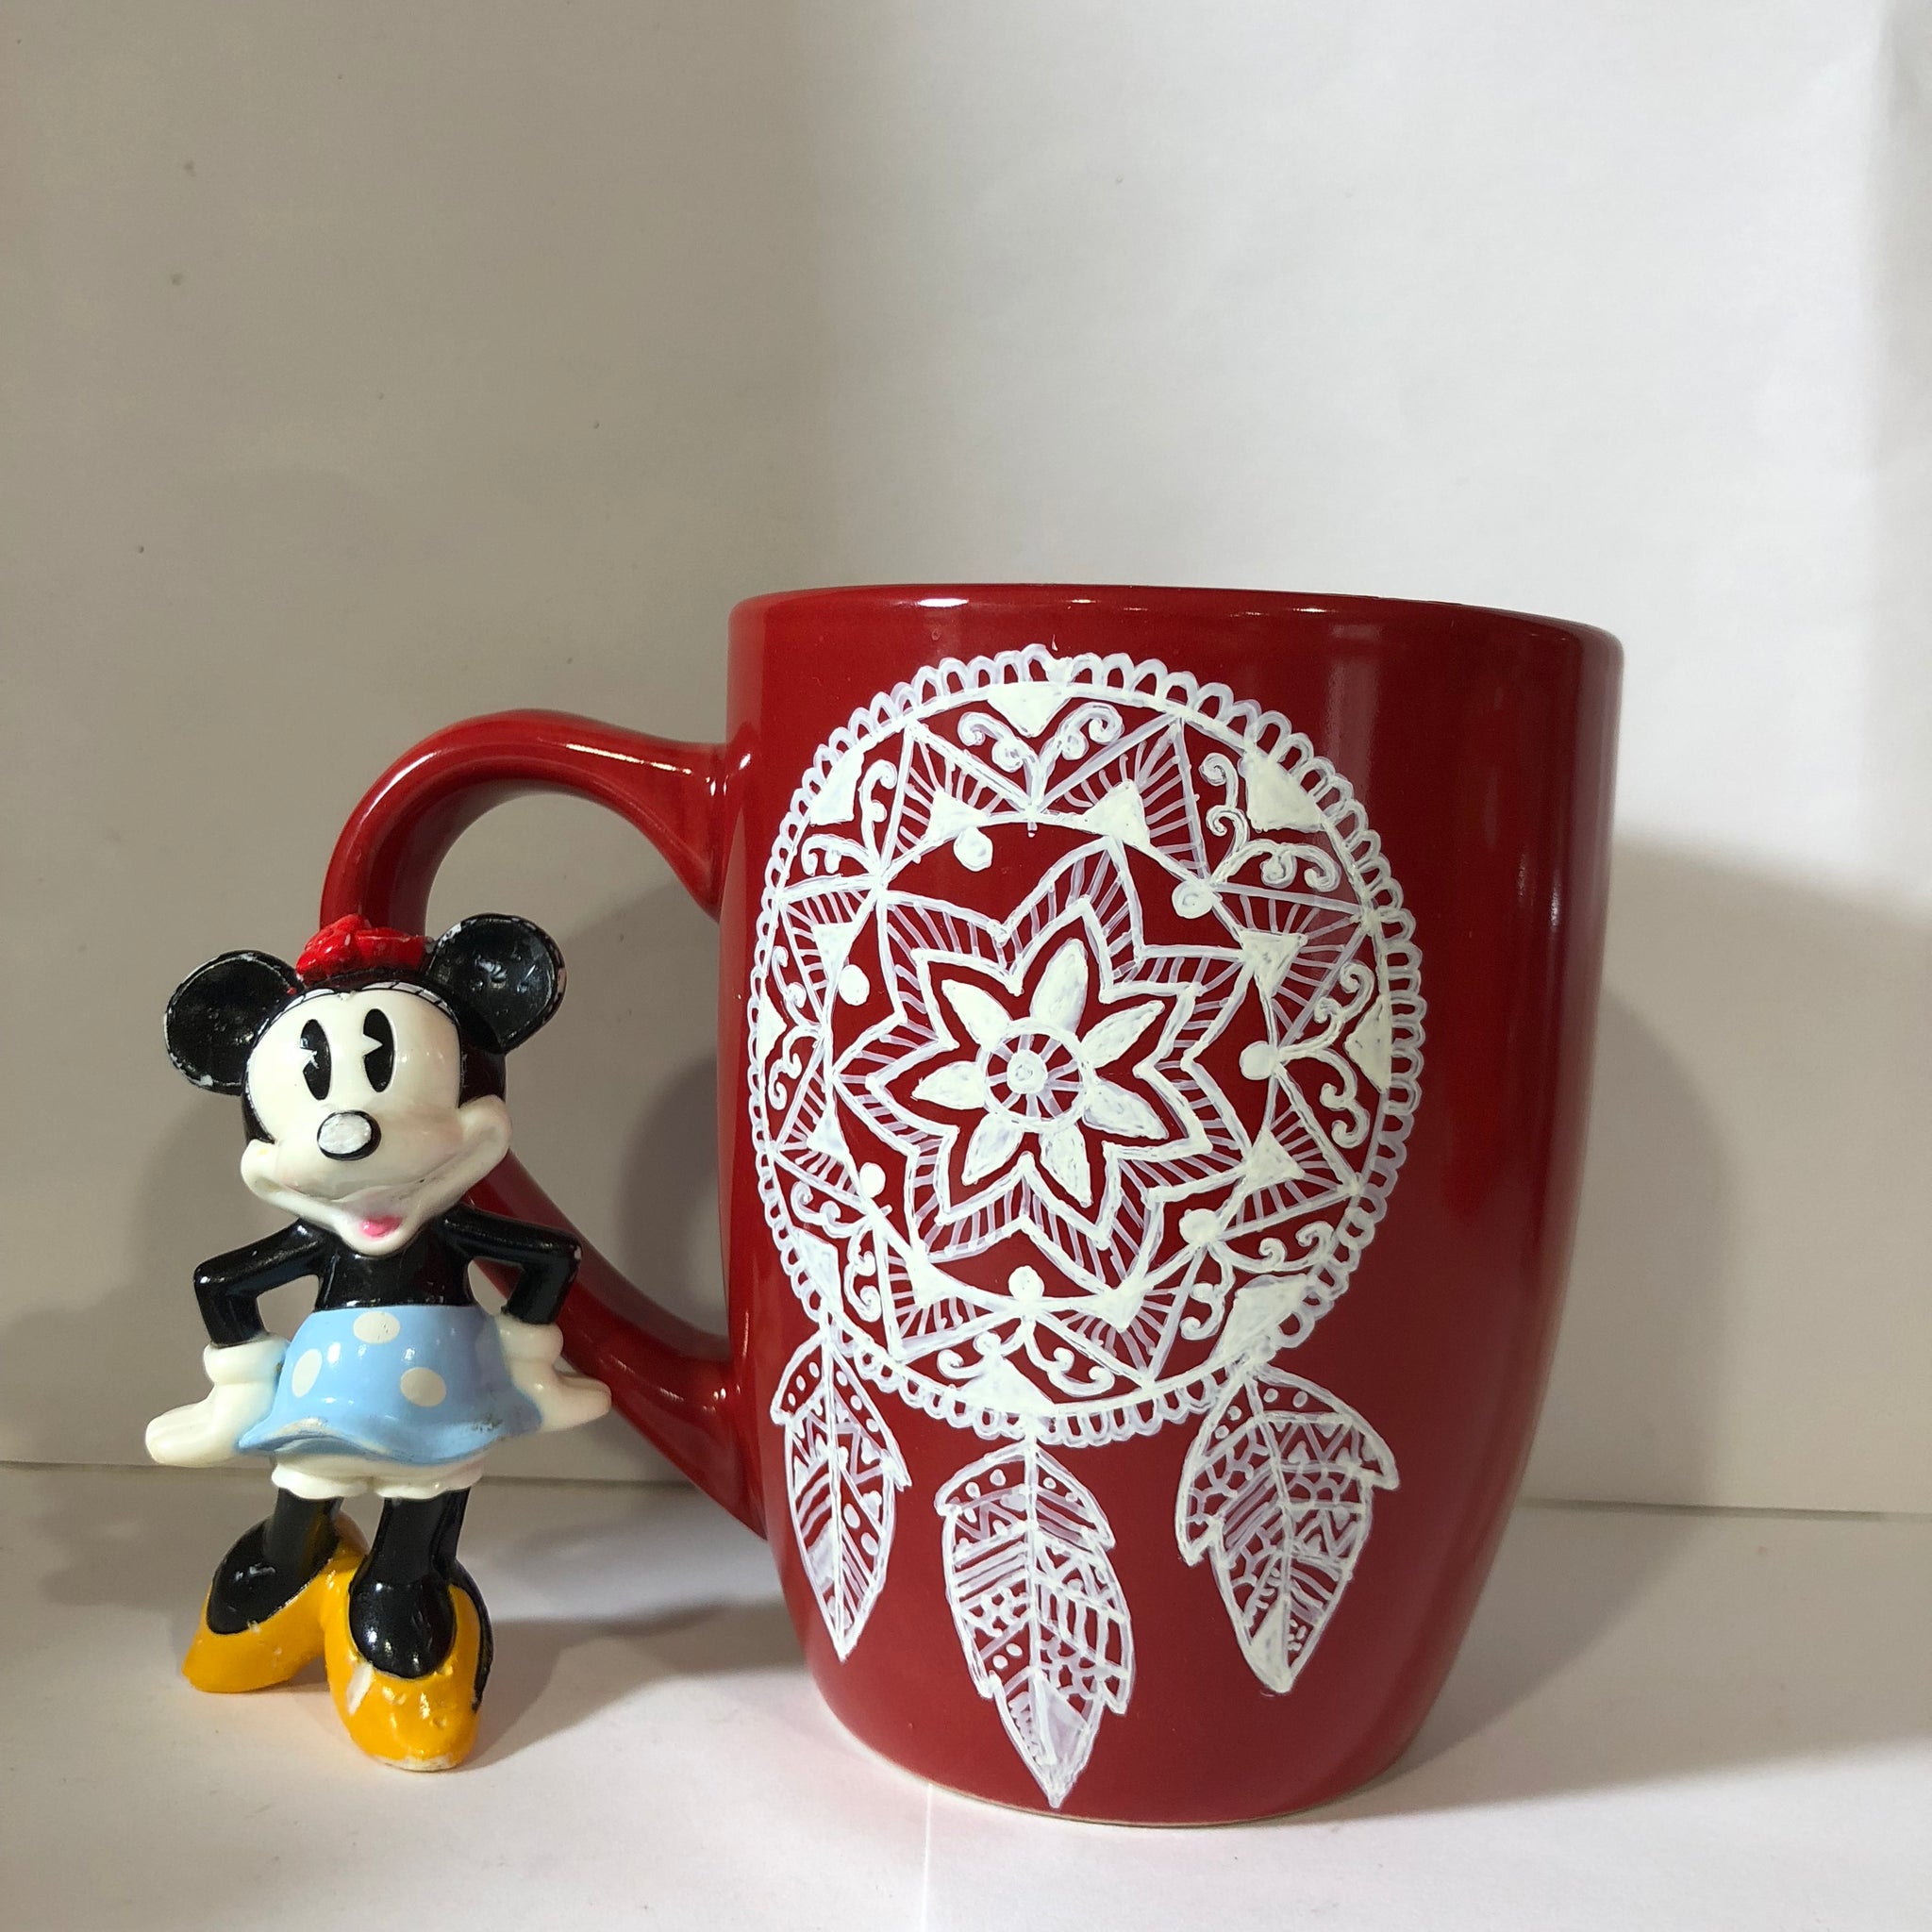 11Oz Red Ceramic Mug with Dream Catcher design in white